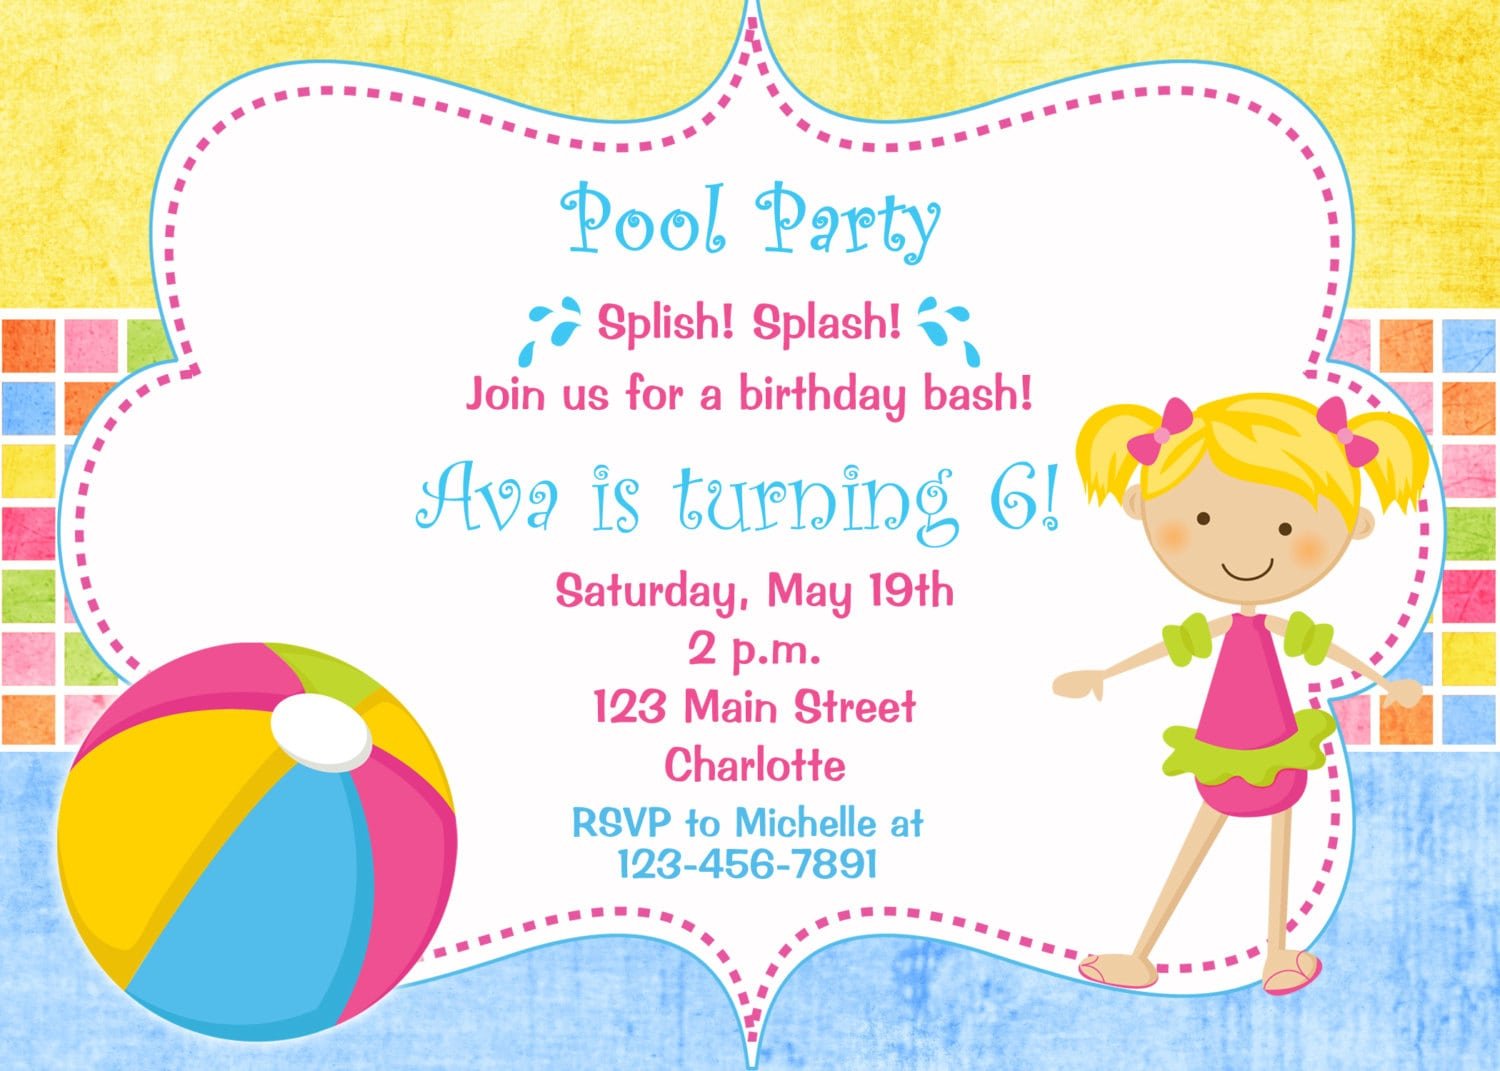 Pool Party Birthday Invitation Em Portugues